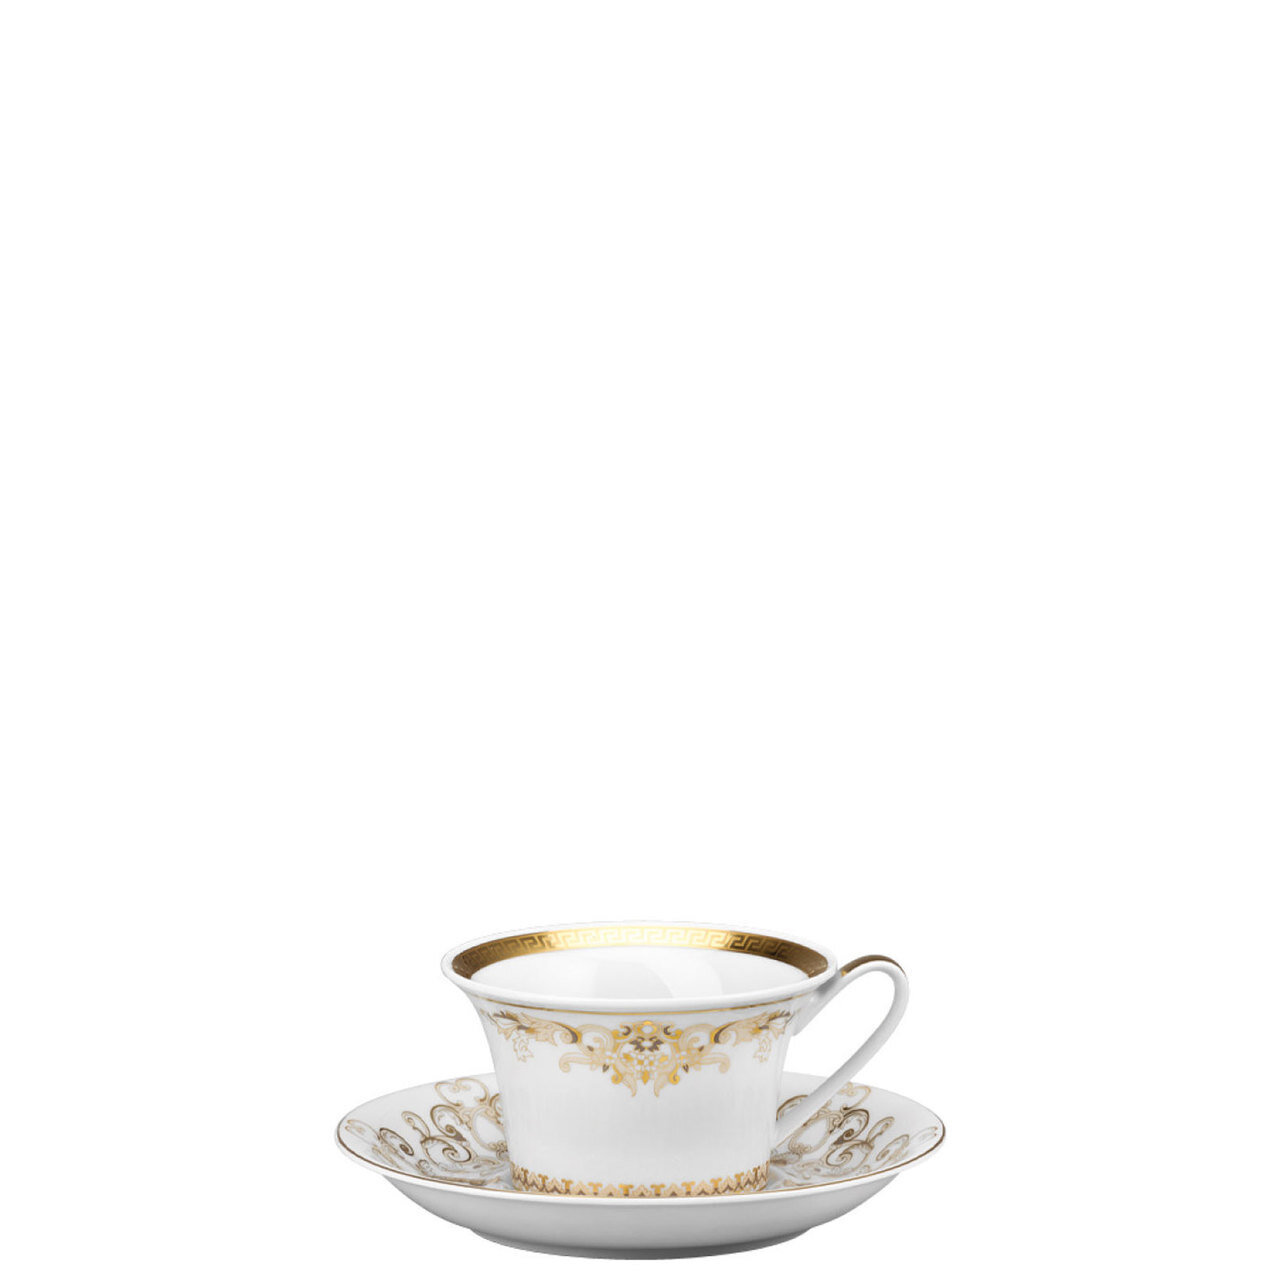 Versace Medusa Gala Gold Tea Cup and Saucer 6 1/4 Inch 7 oz.